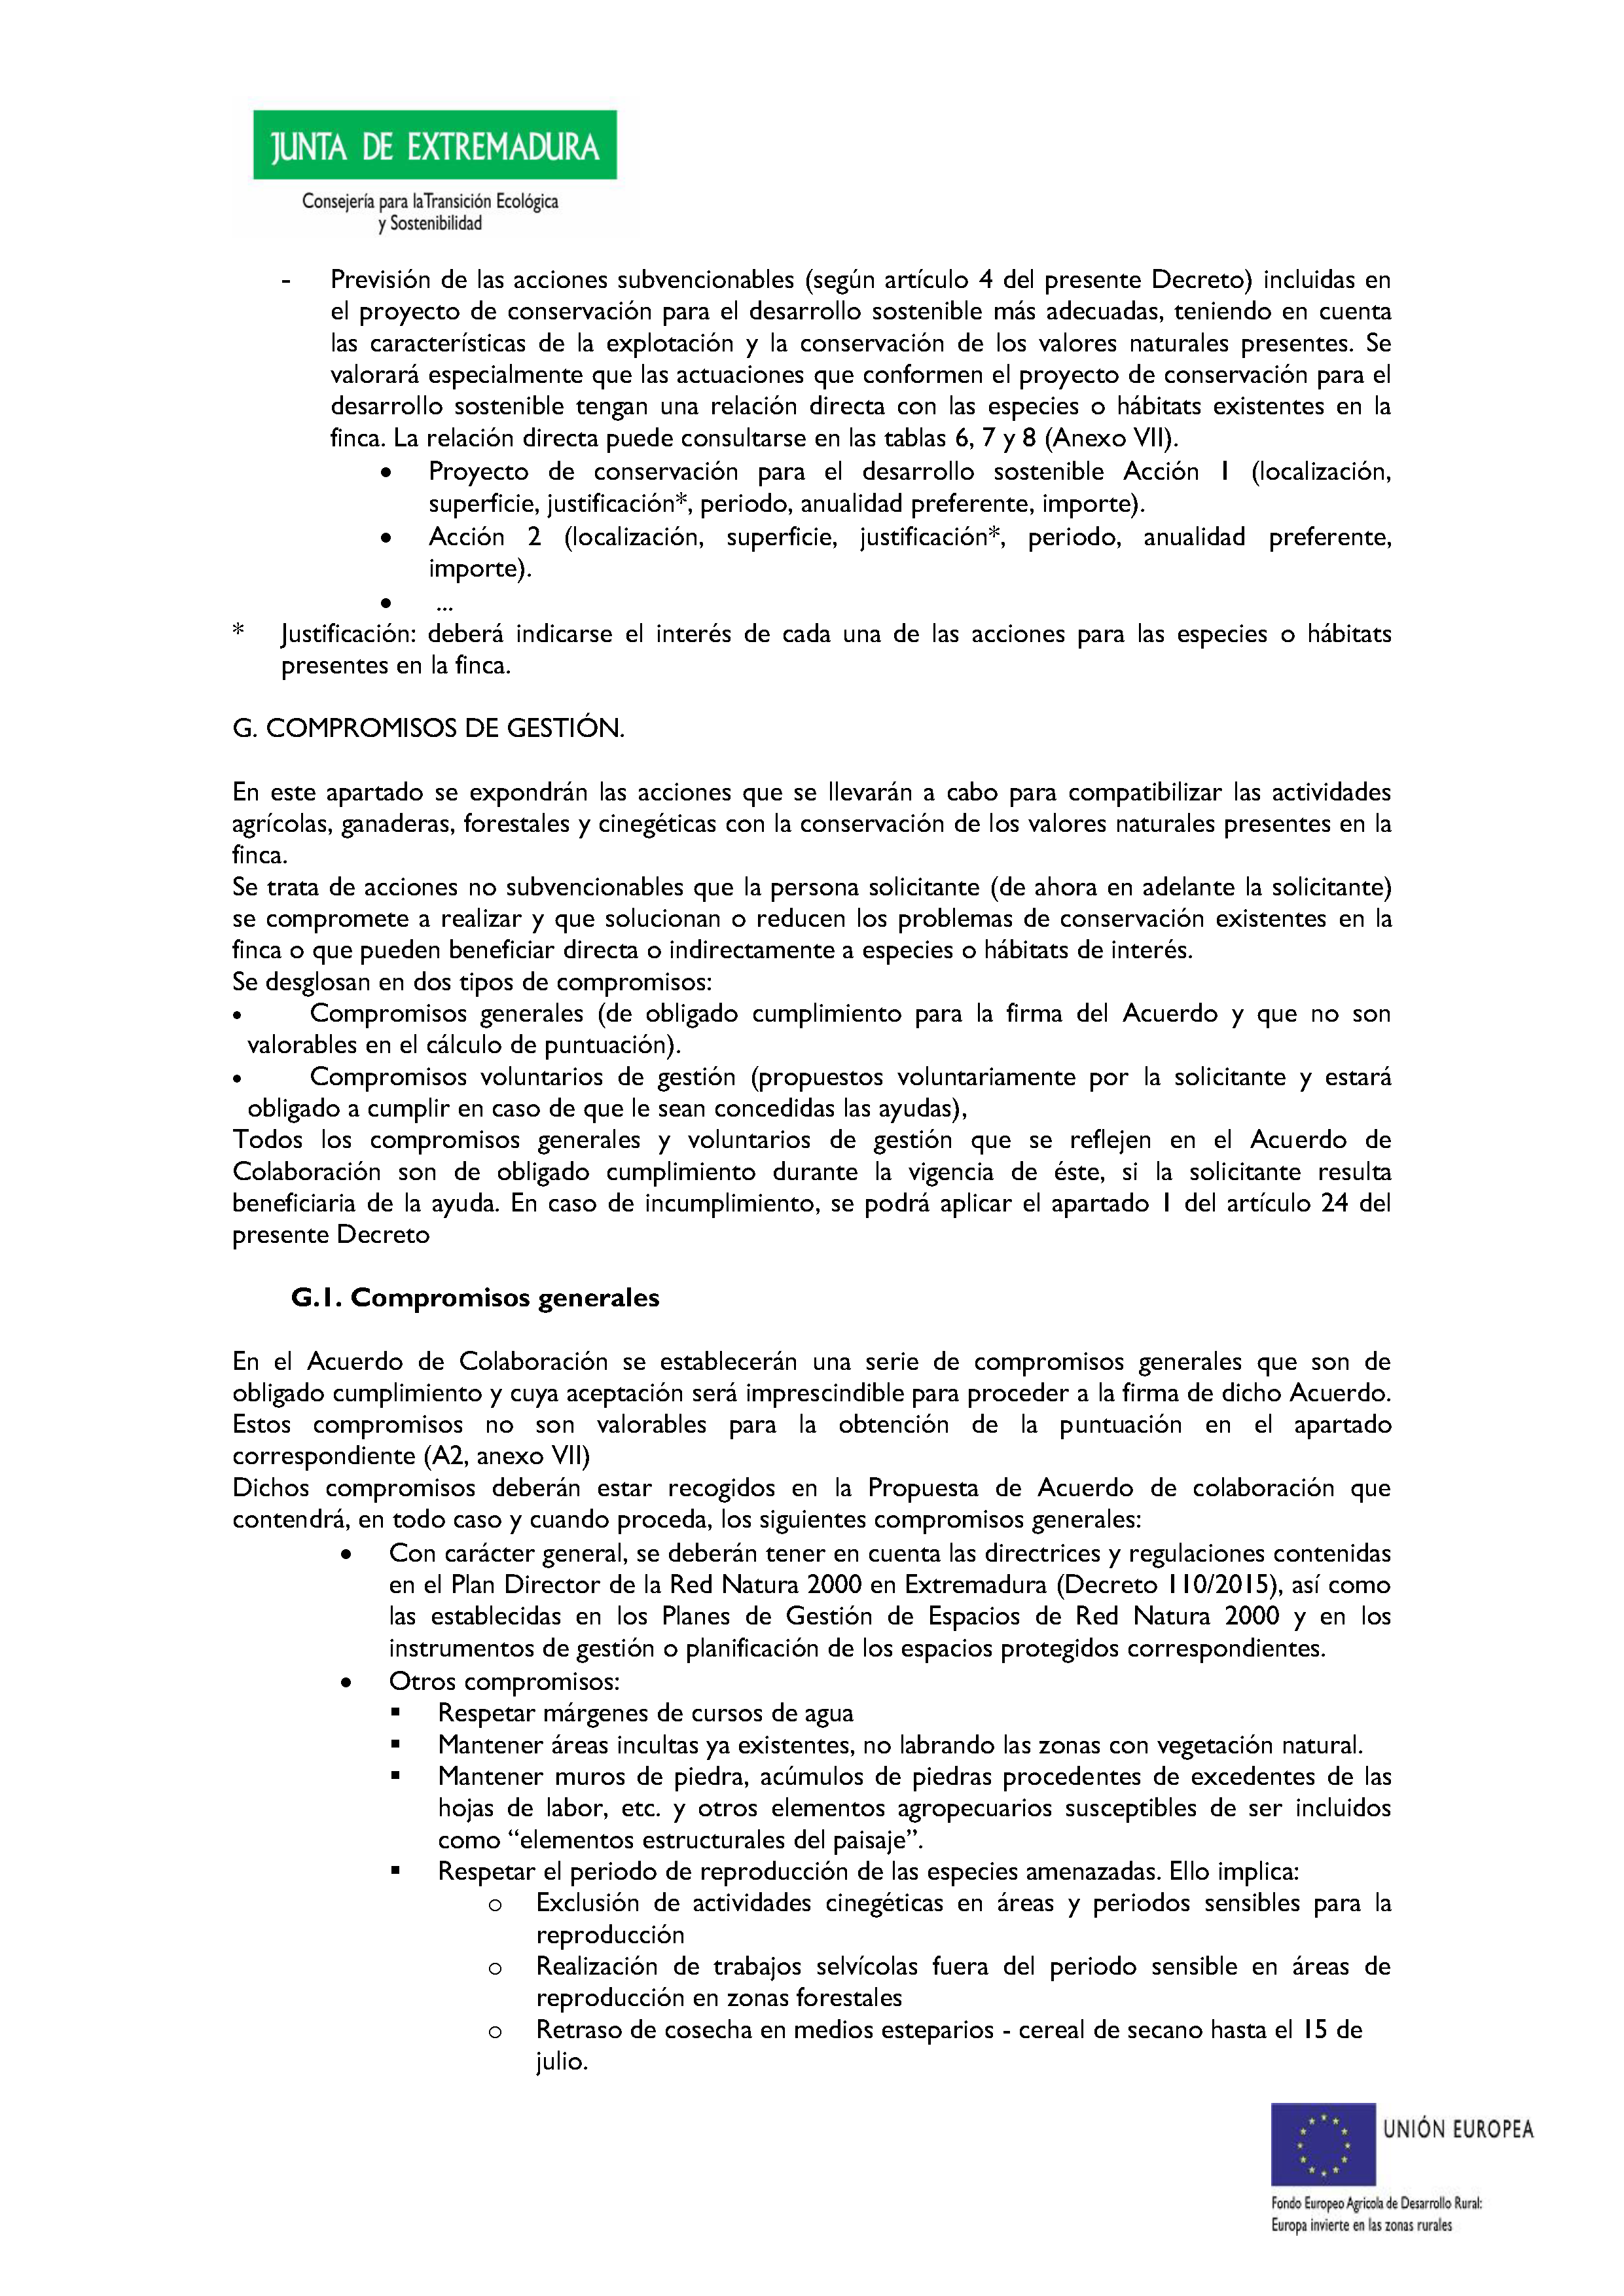 ANEXO VIII 1. PROPUESTA DE ACUERDO DE COLABORACIÓN PARA EL DESARROLLO SOSTENIBLE Pag 2